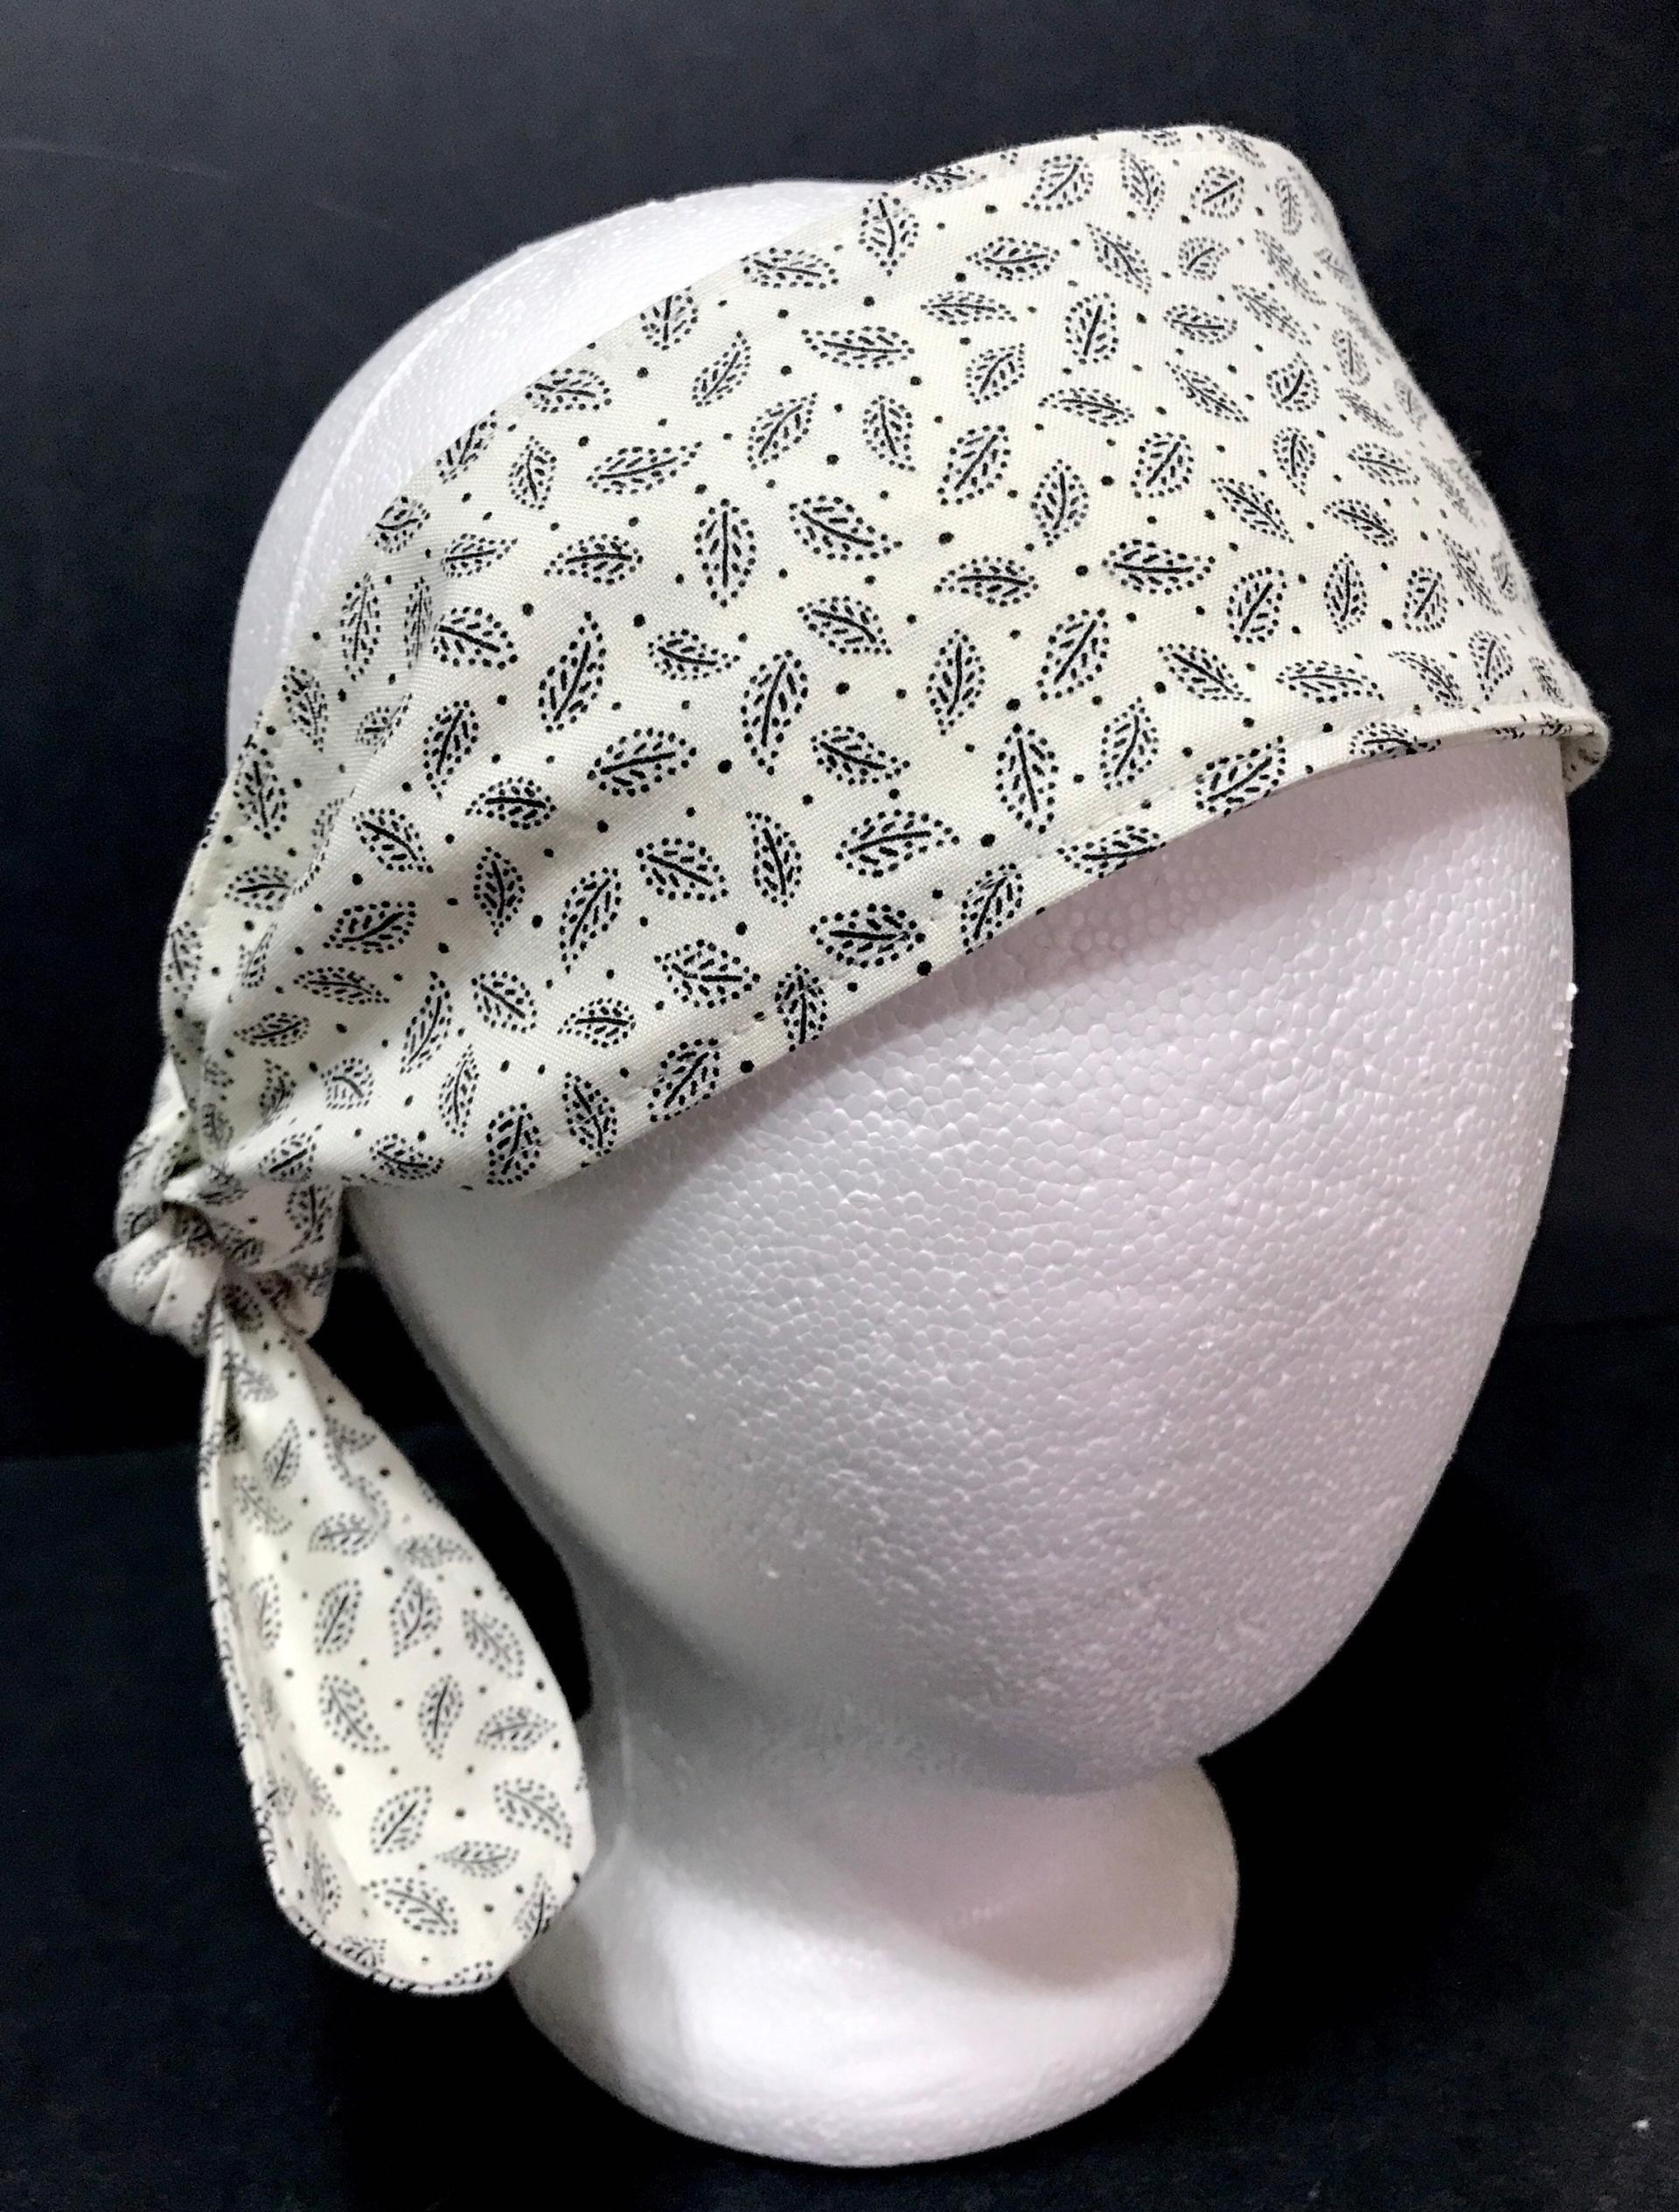 3” Wide headband, self tie, flowers or leaves, neutral colors, pin up, hair tie, hair wrap, retro, botanical print